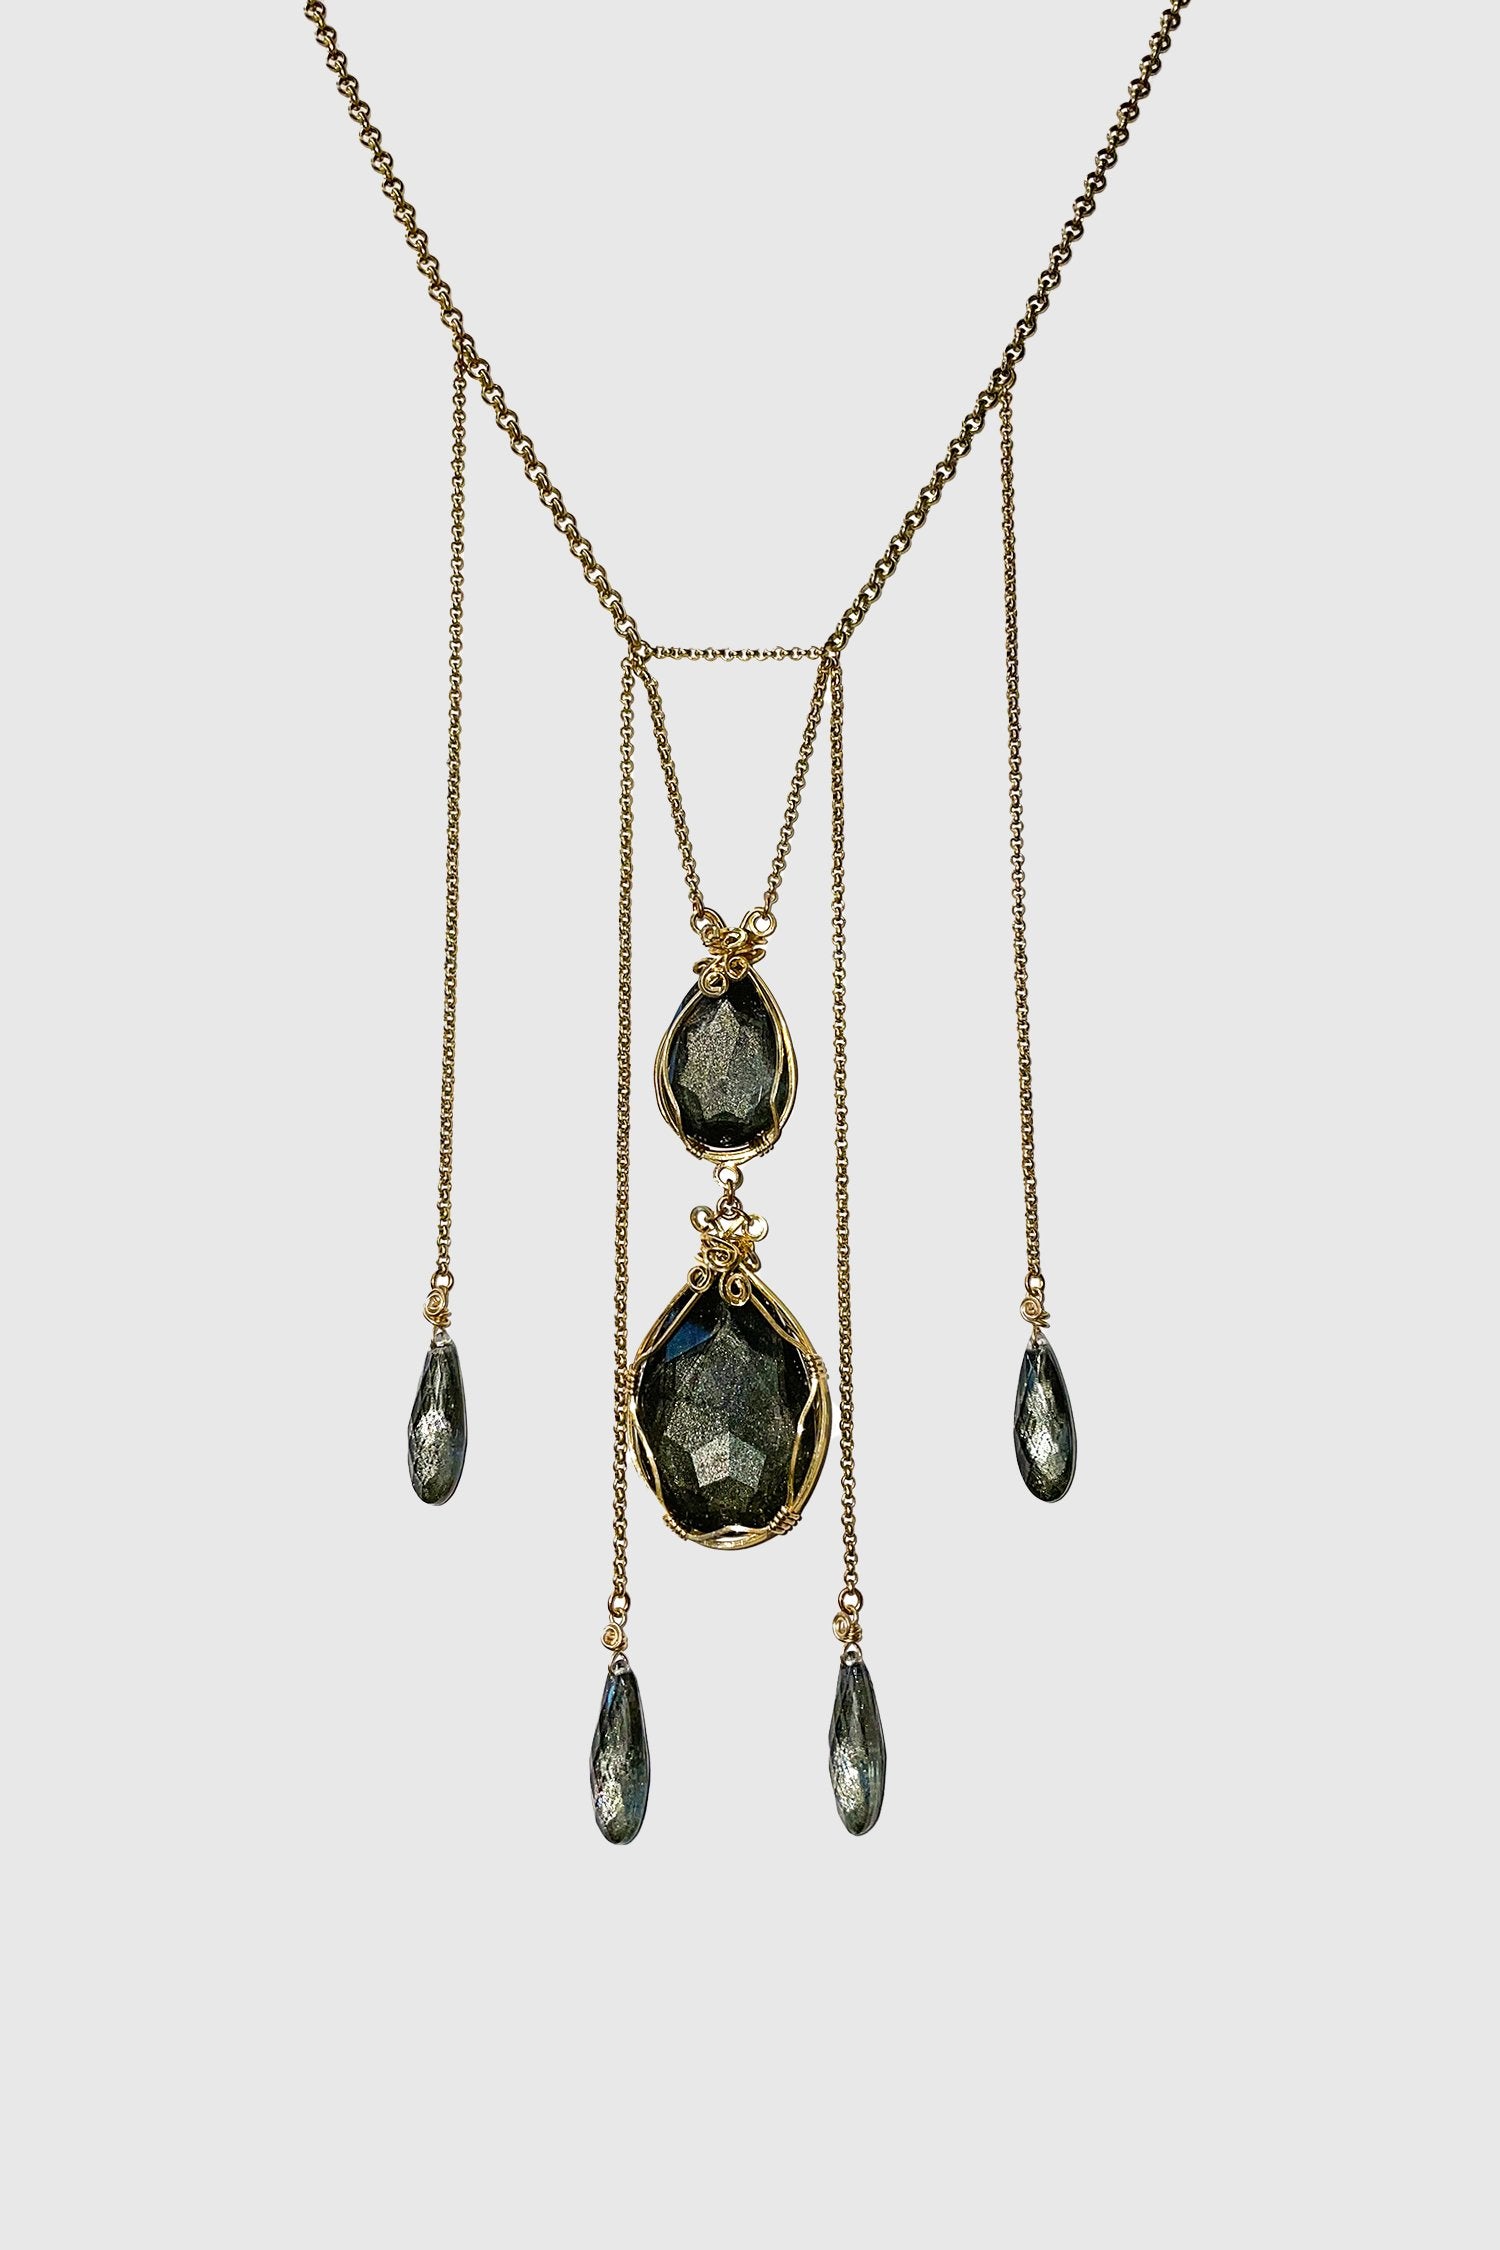 Anna Sui x Erickson Beamon Teardrop Crystal long Necklace, 2-dark green and 4-pendant stone